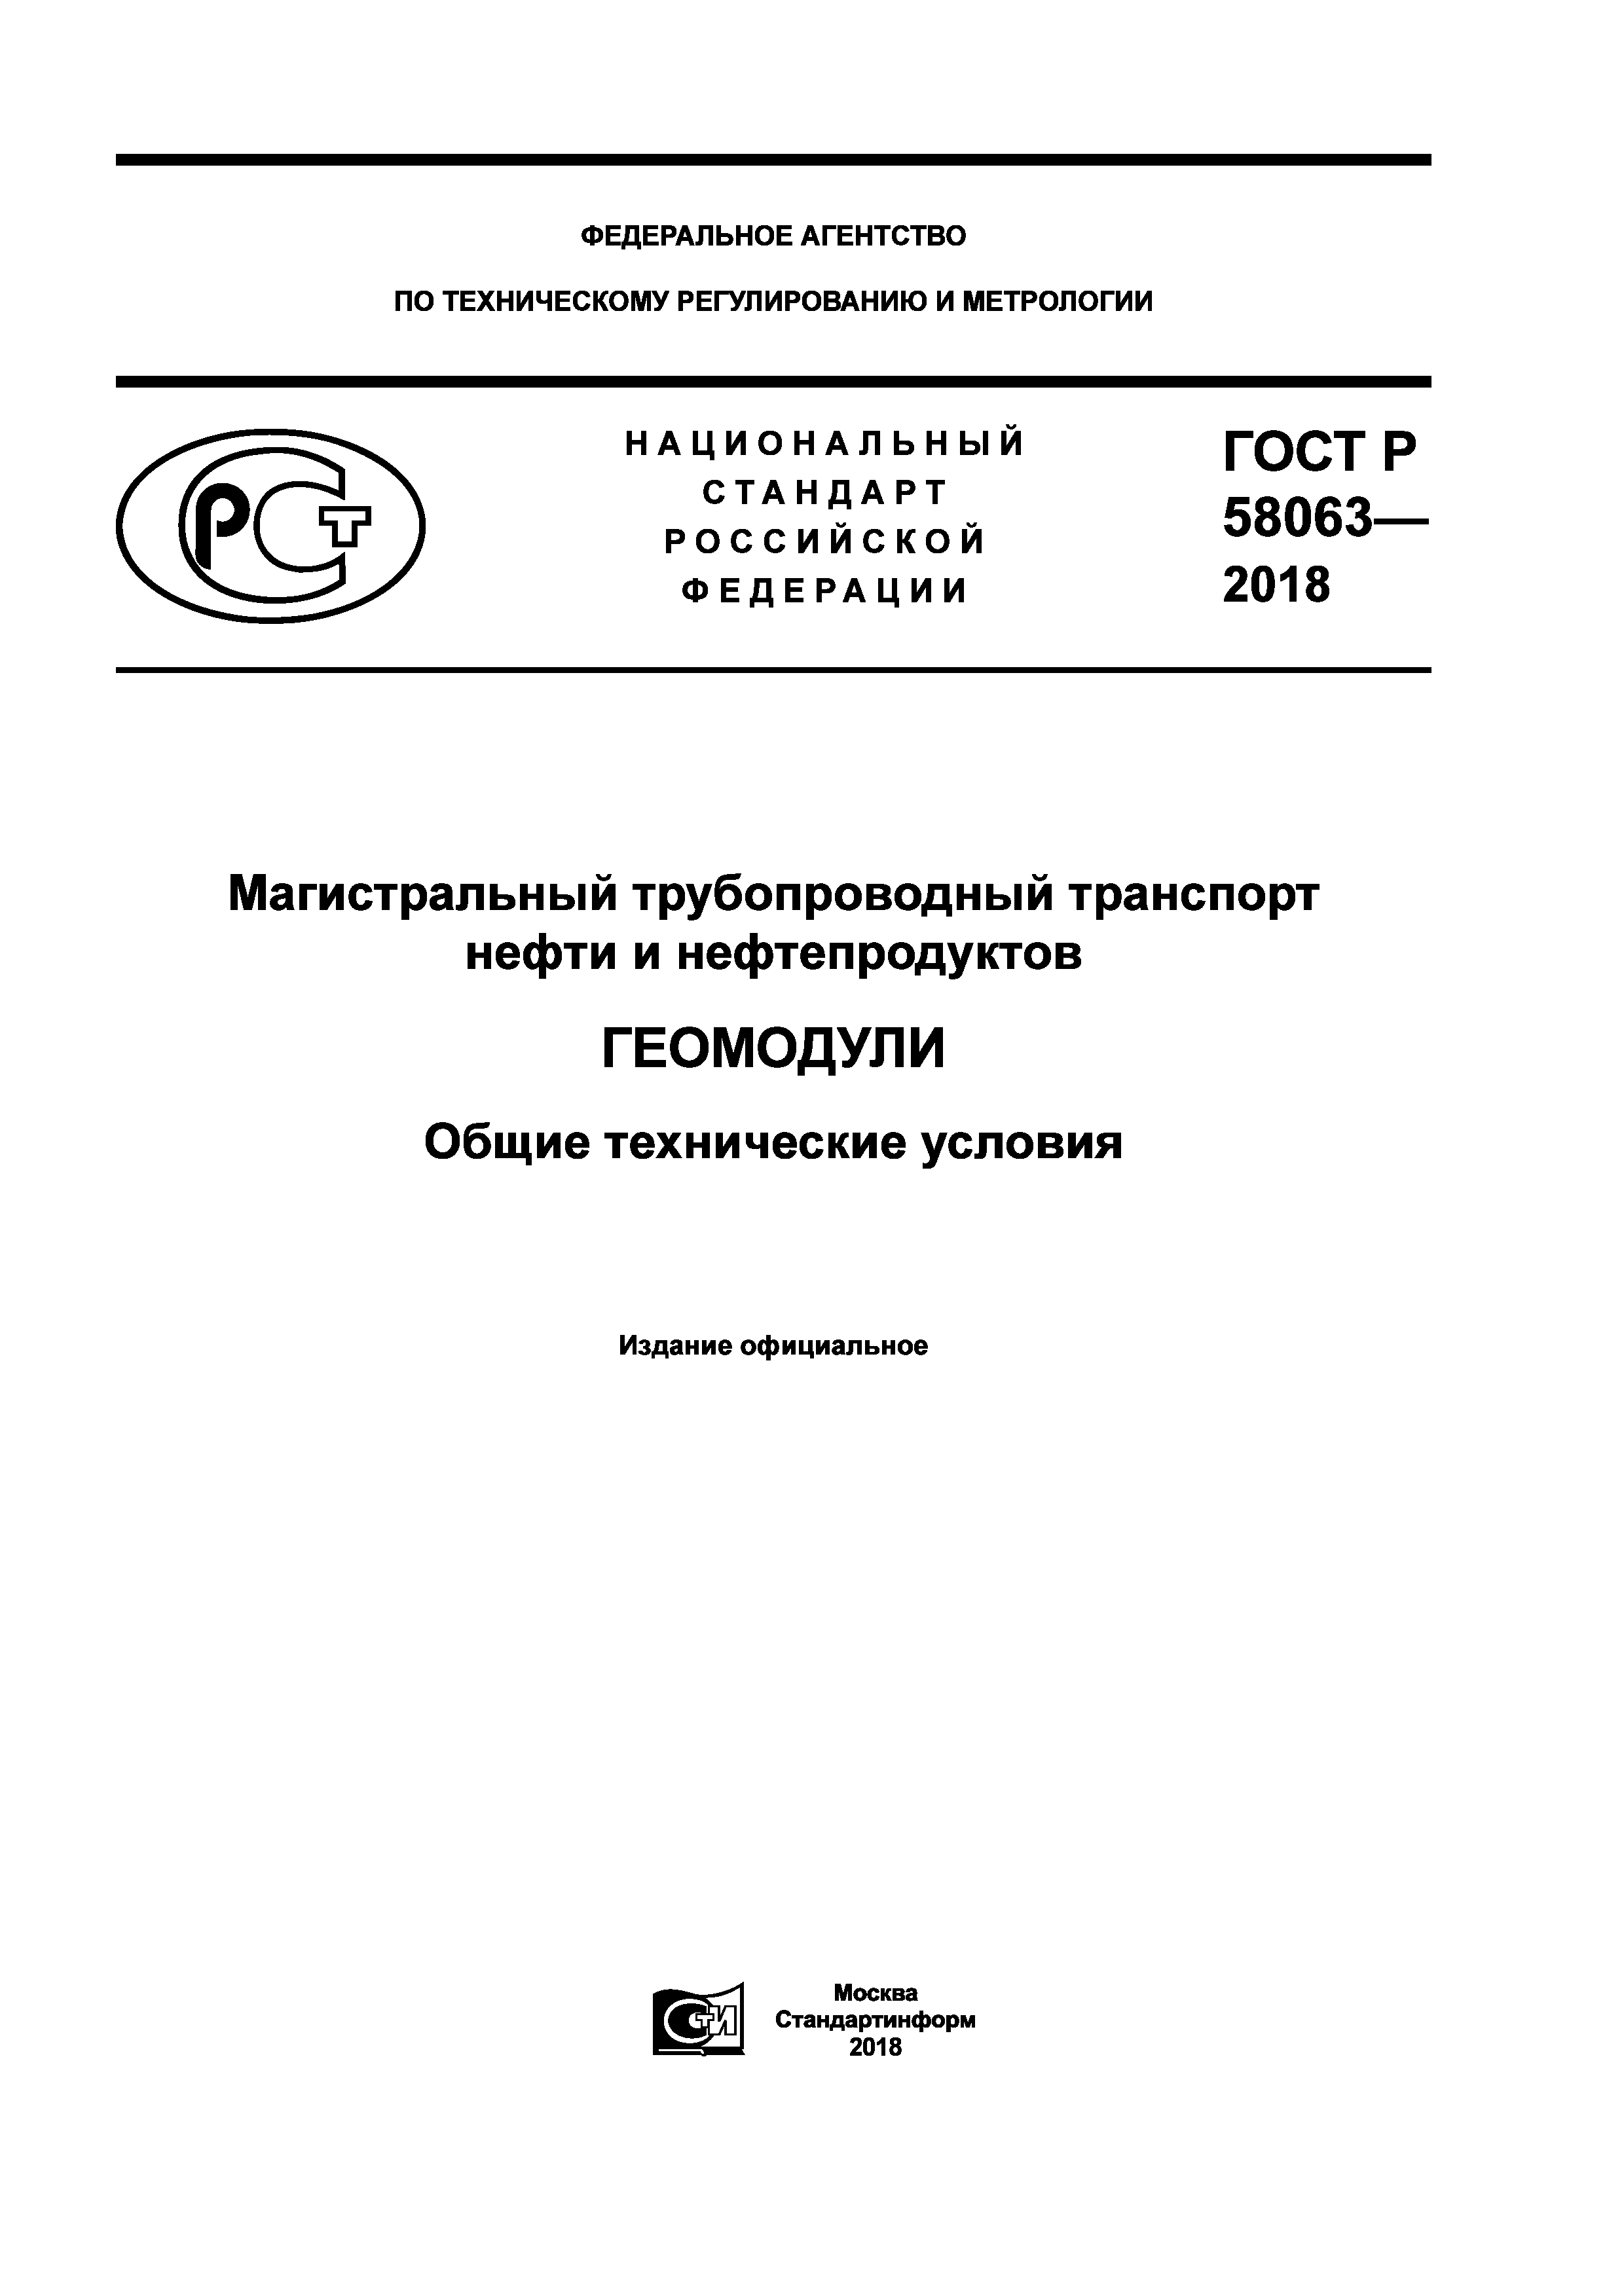 ГОСТ Р 58063-2018